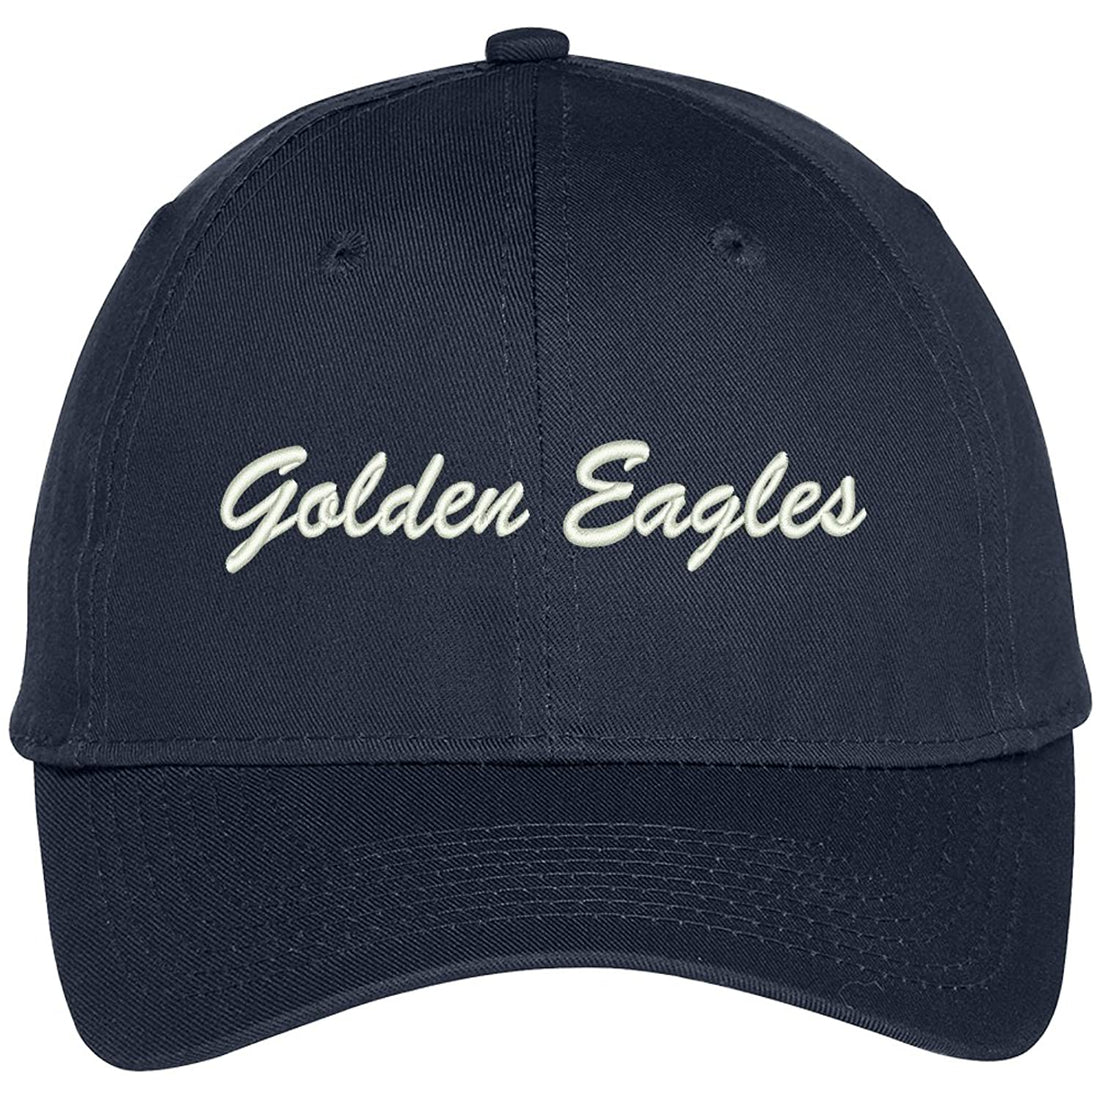 Trendy Apparel Shop Golden Eagles Embroidered Team Nickname Mascot Cap - Navy